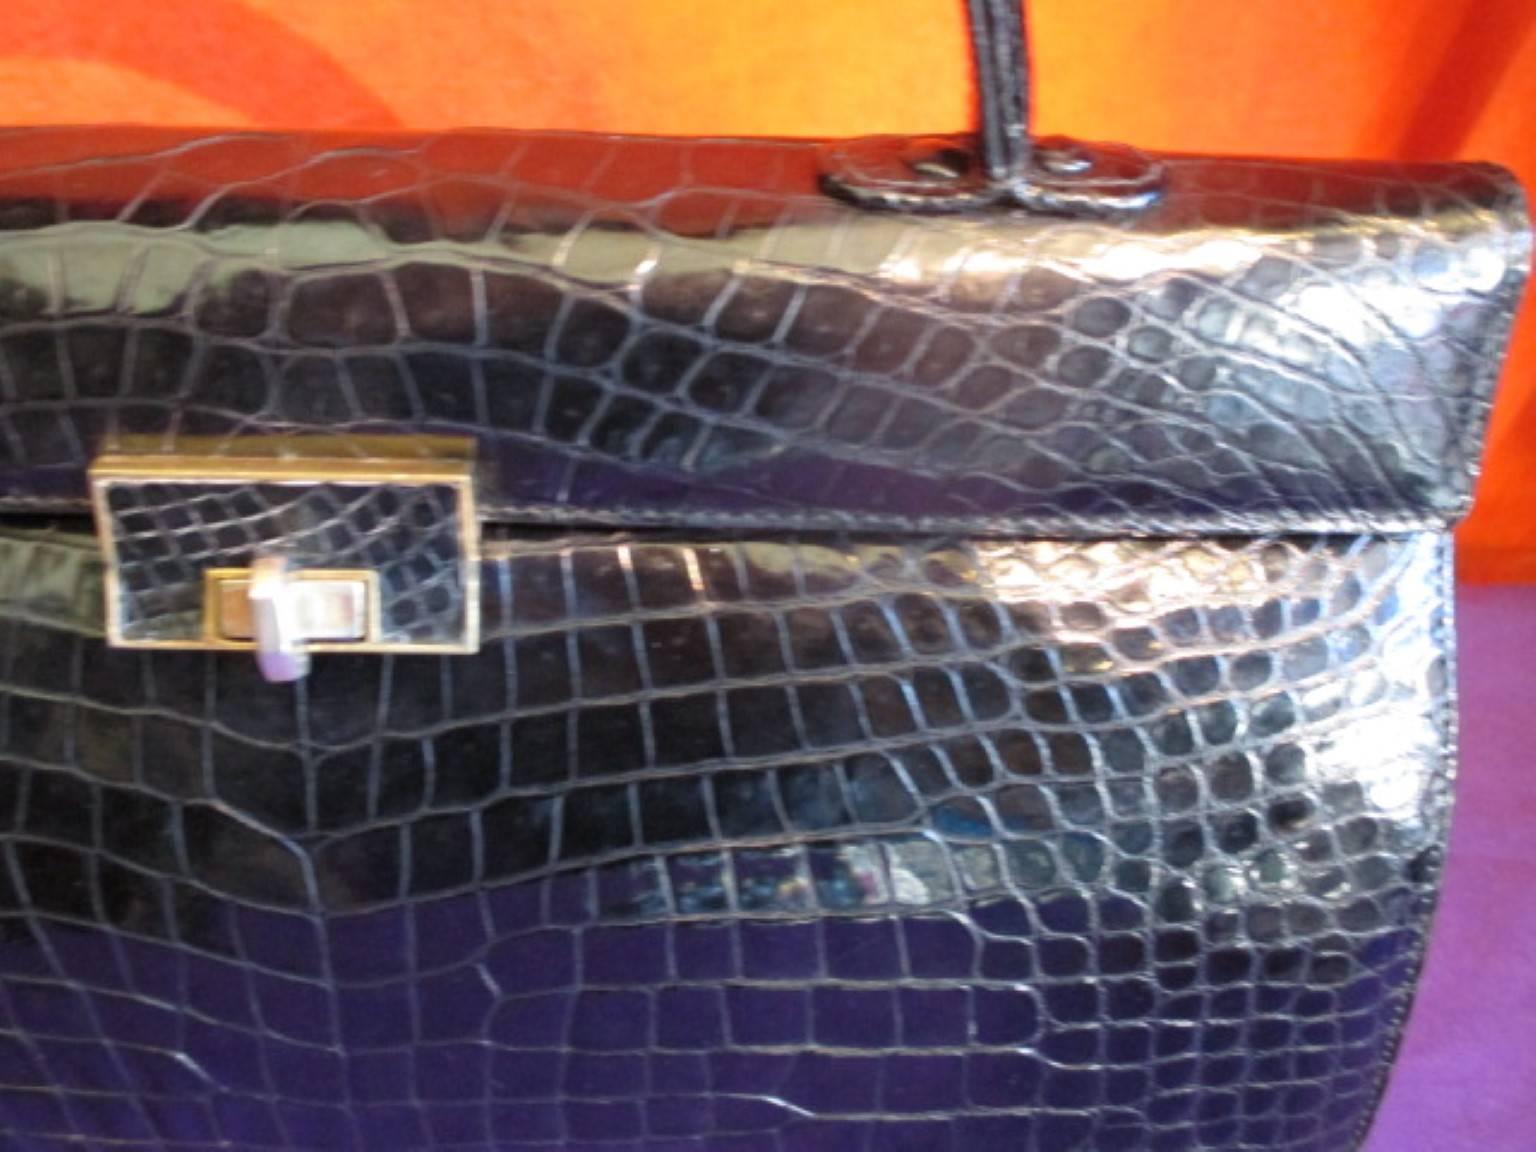 crocodile style handbags